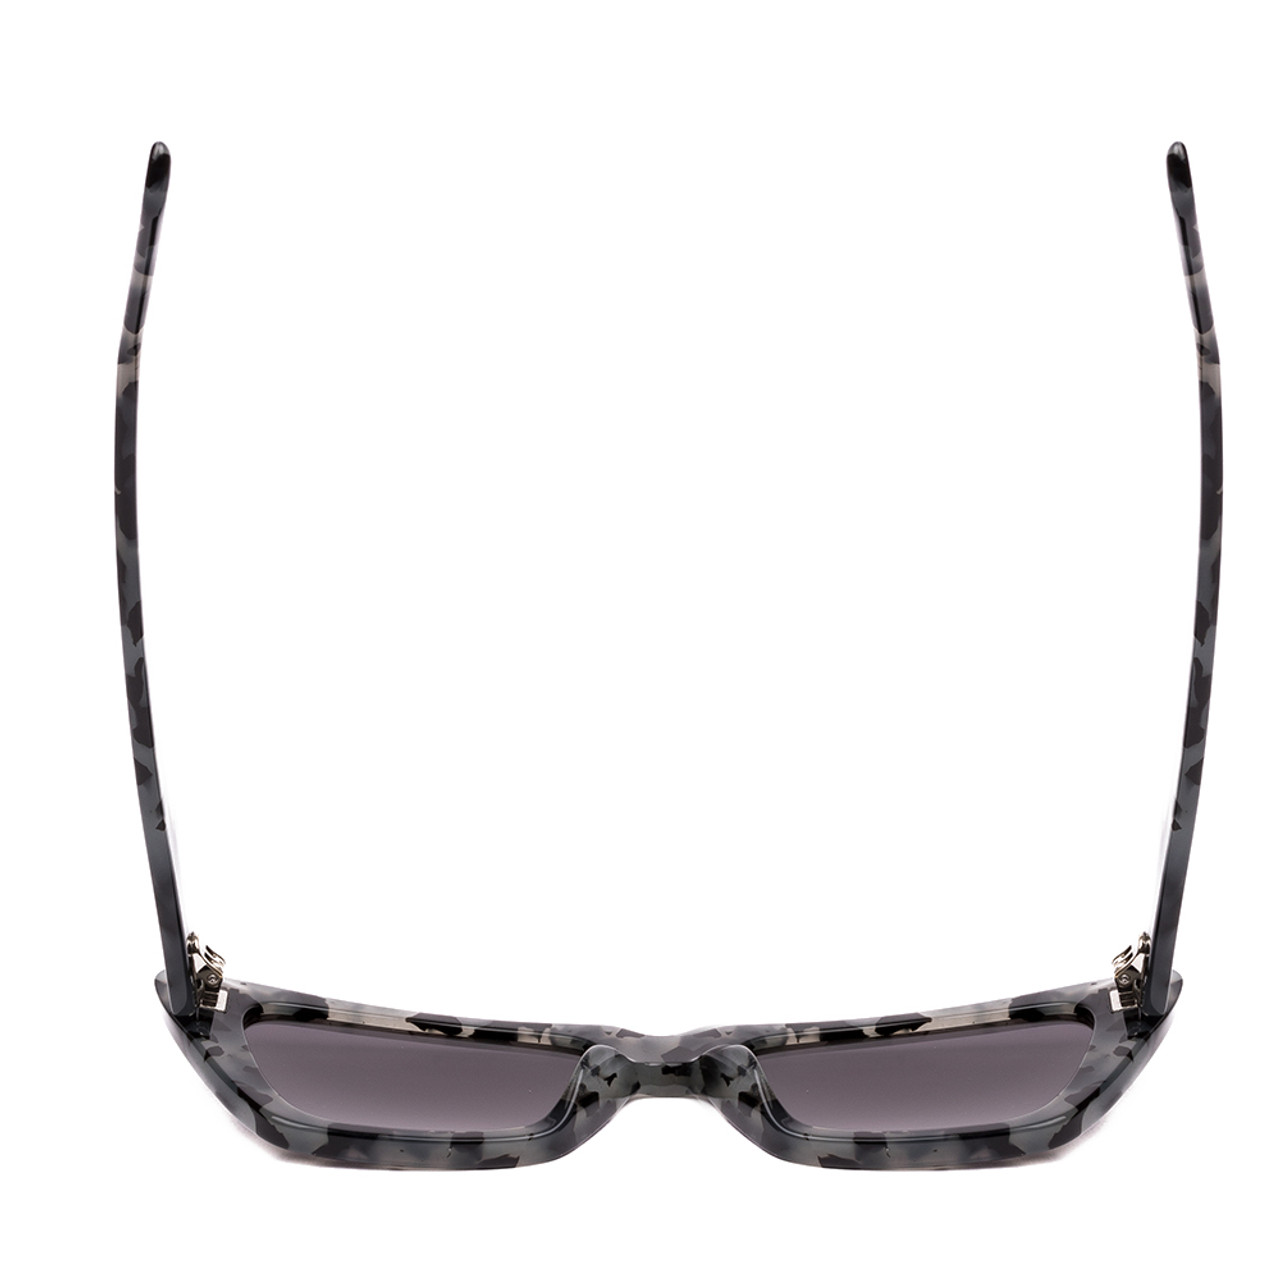 Top View of SITO SHADES WONDERLAND Cat Eye Sunglasses in Black Grey Tortoise/Iron Gray 54 mm